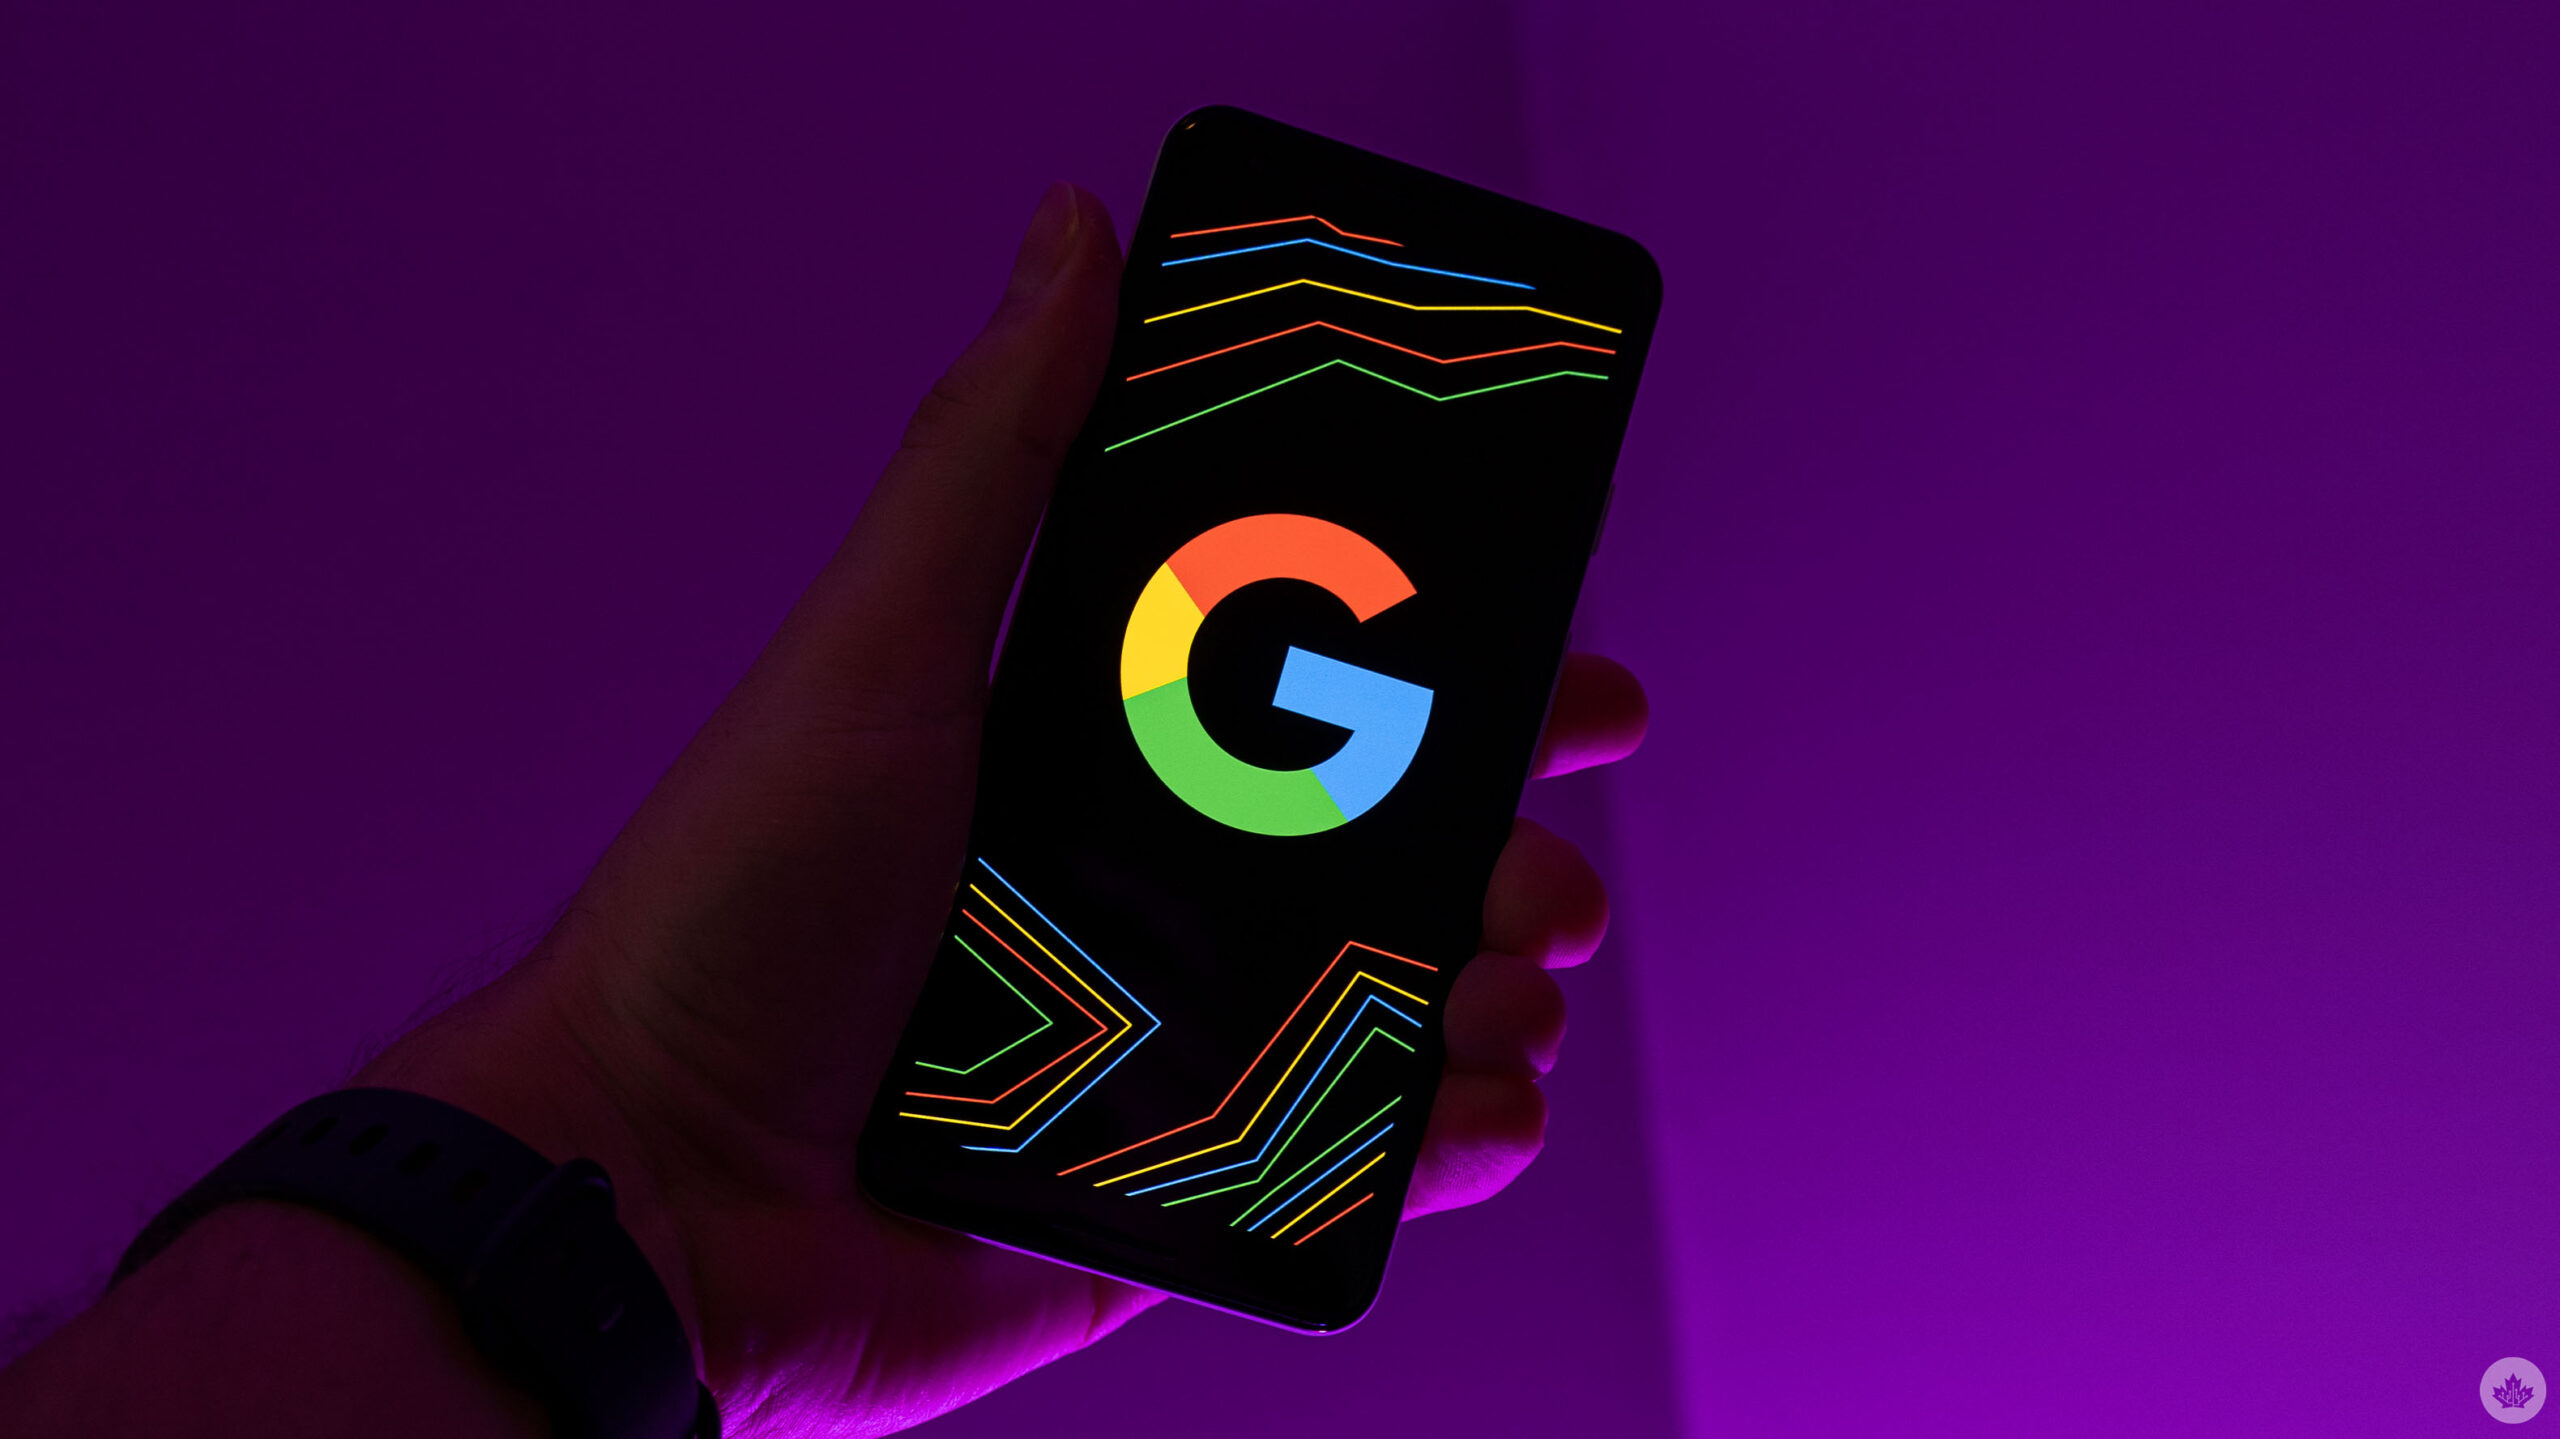 Google 'G' logo